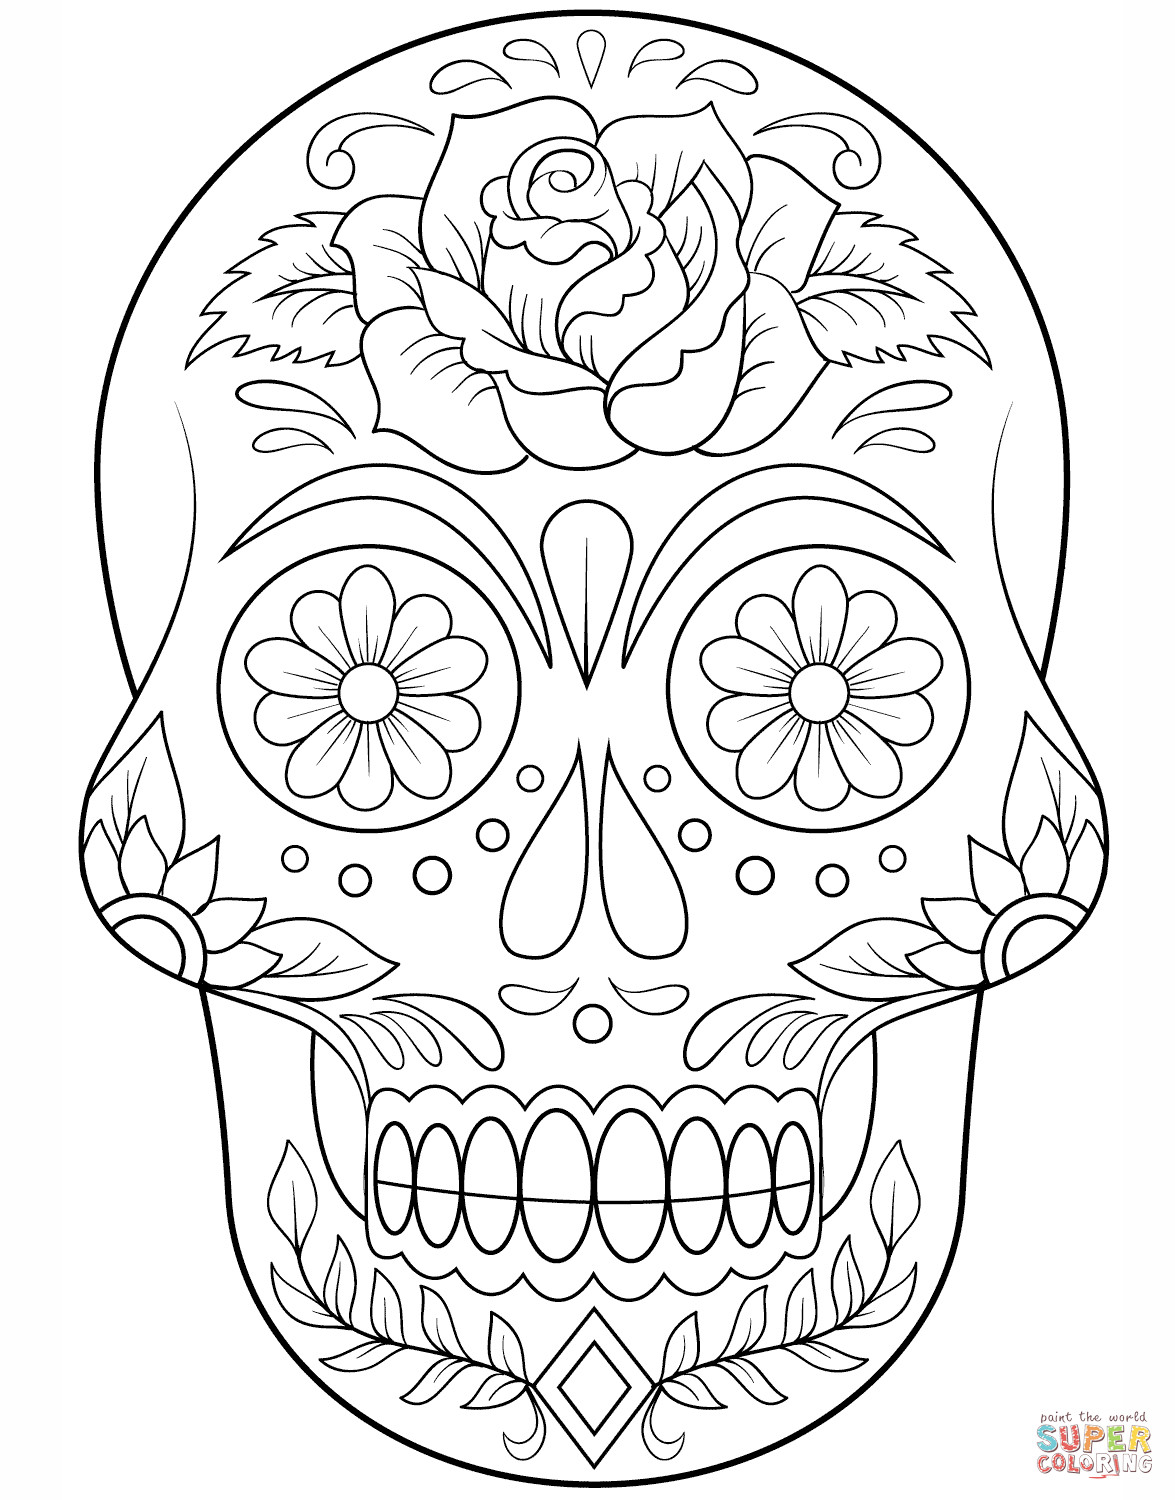 Sugar Skull Coloring Sheet
 Sugar Skull with Flowers coloring page